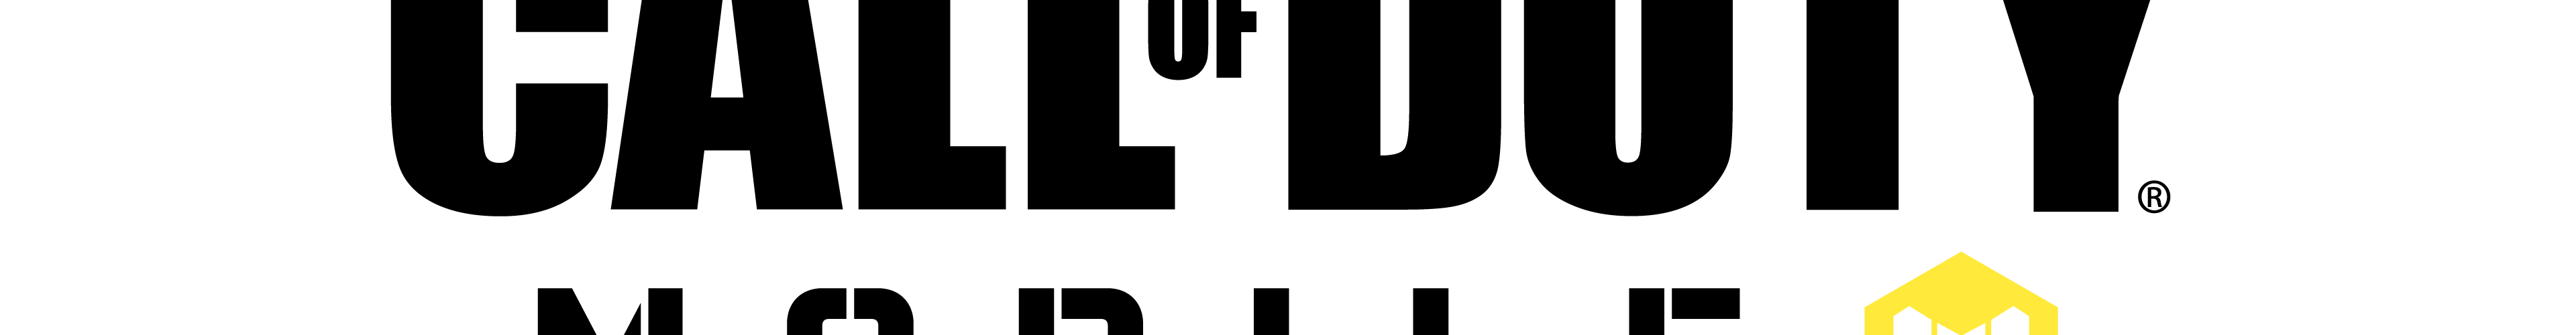 Call of Duty Mobile Logo